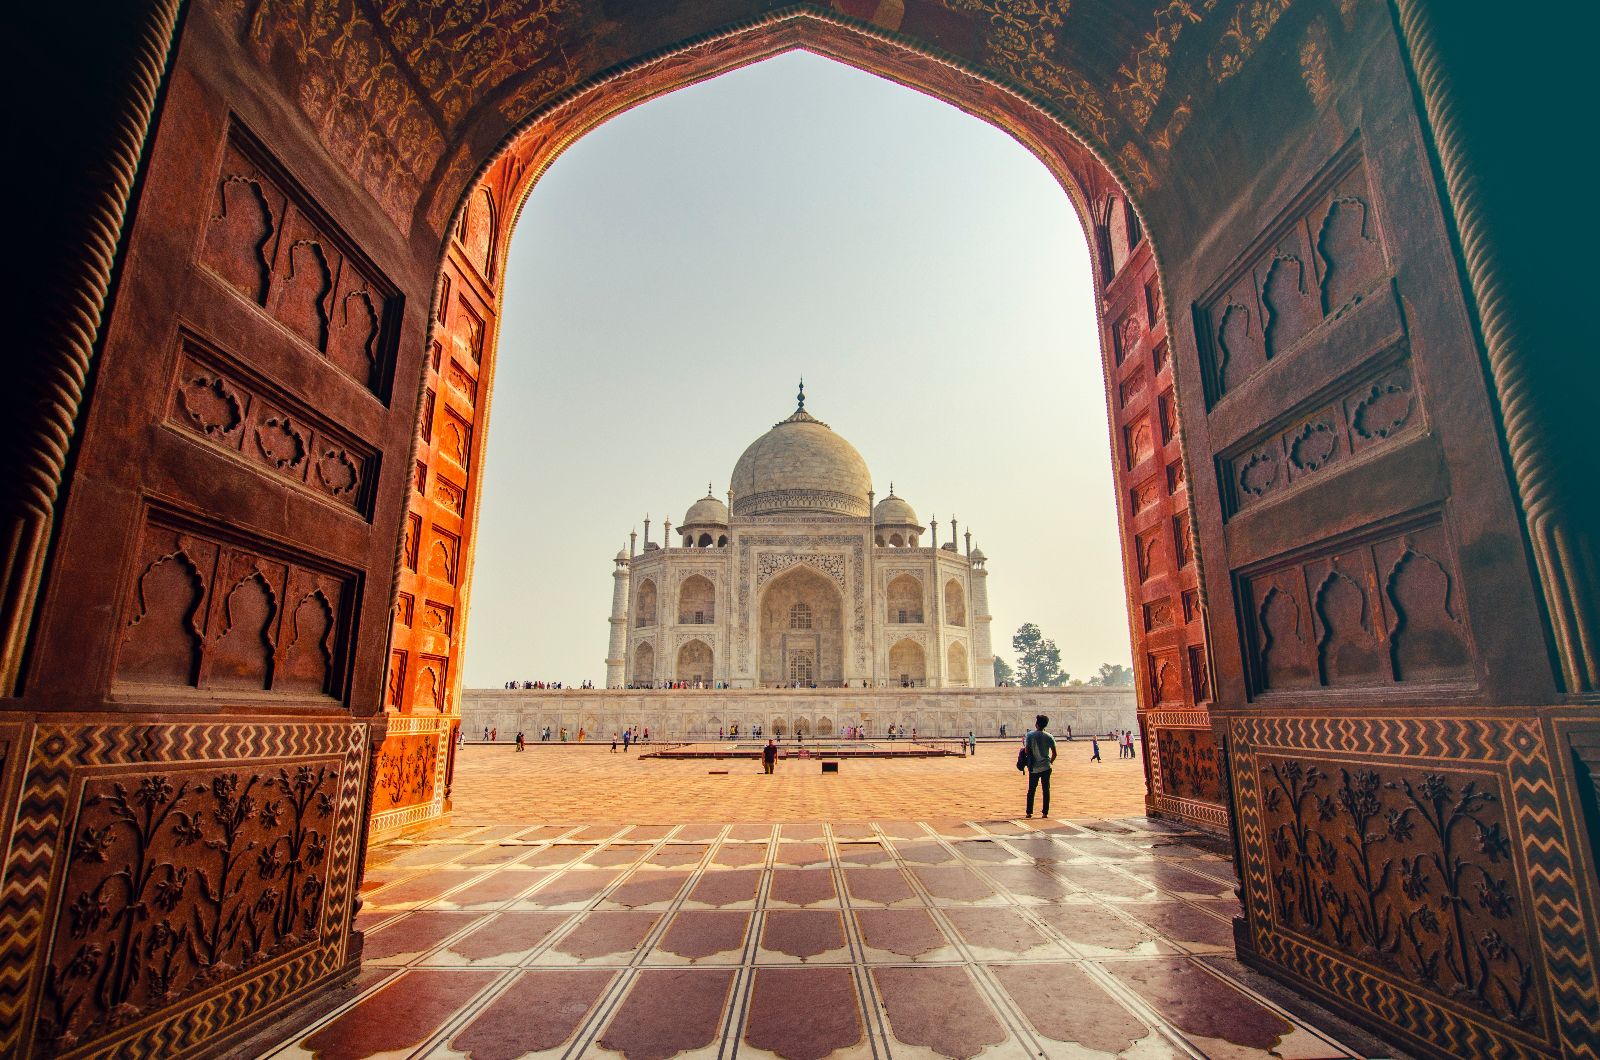 View of the Taj Mahal in India through an ornate doorway